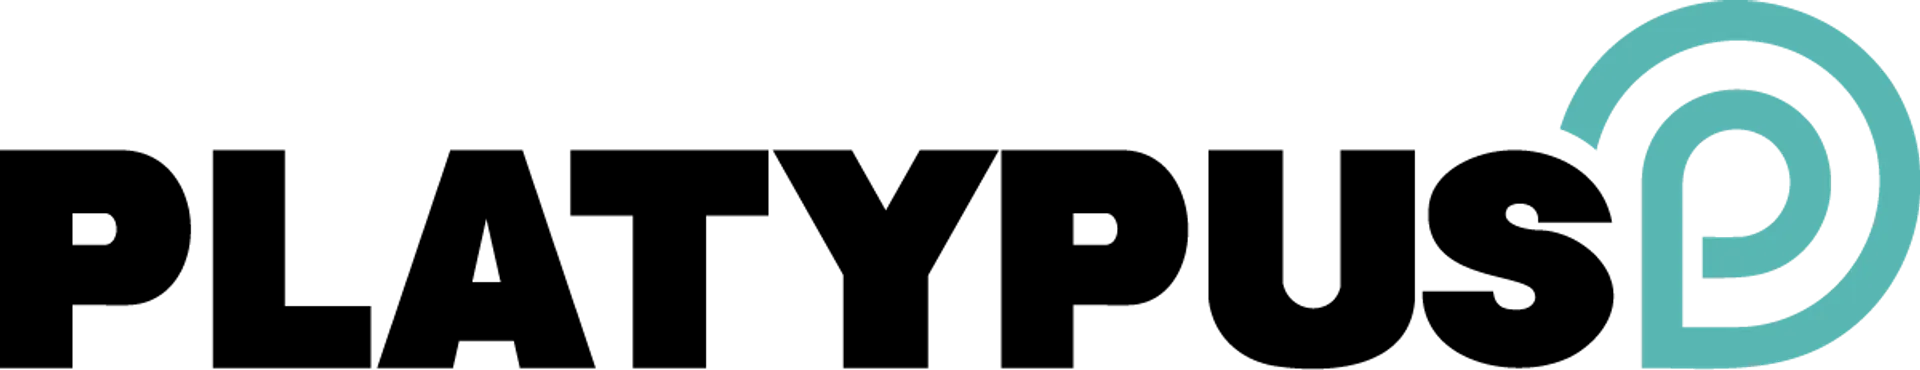 PLATYPUS logo of current catalogue